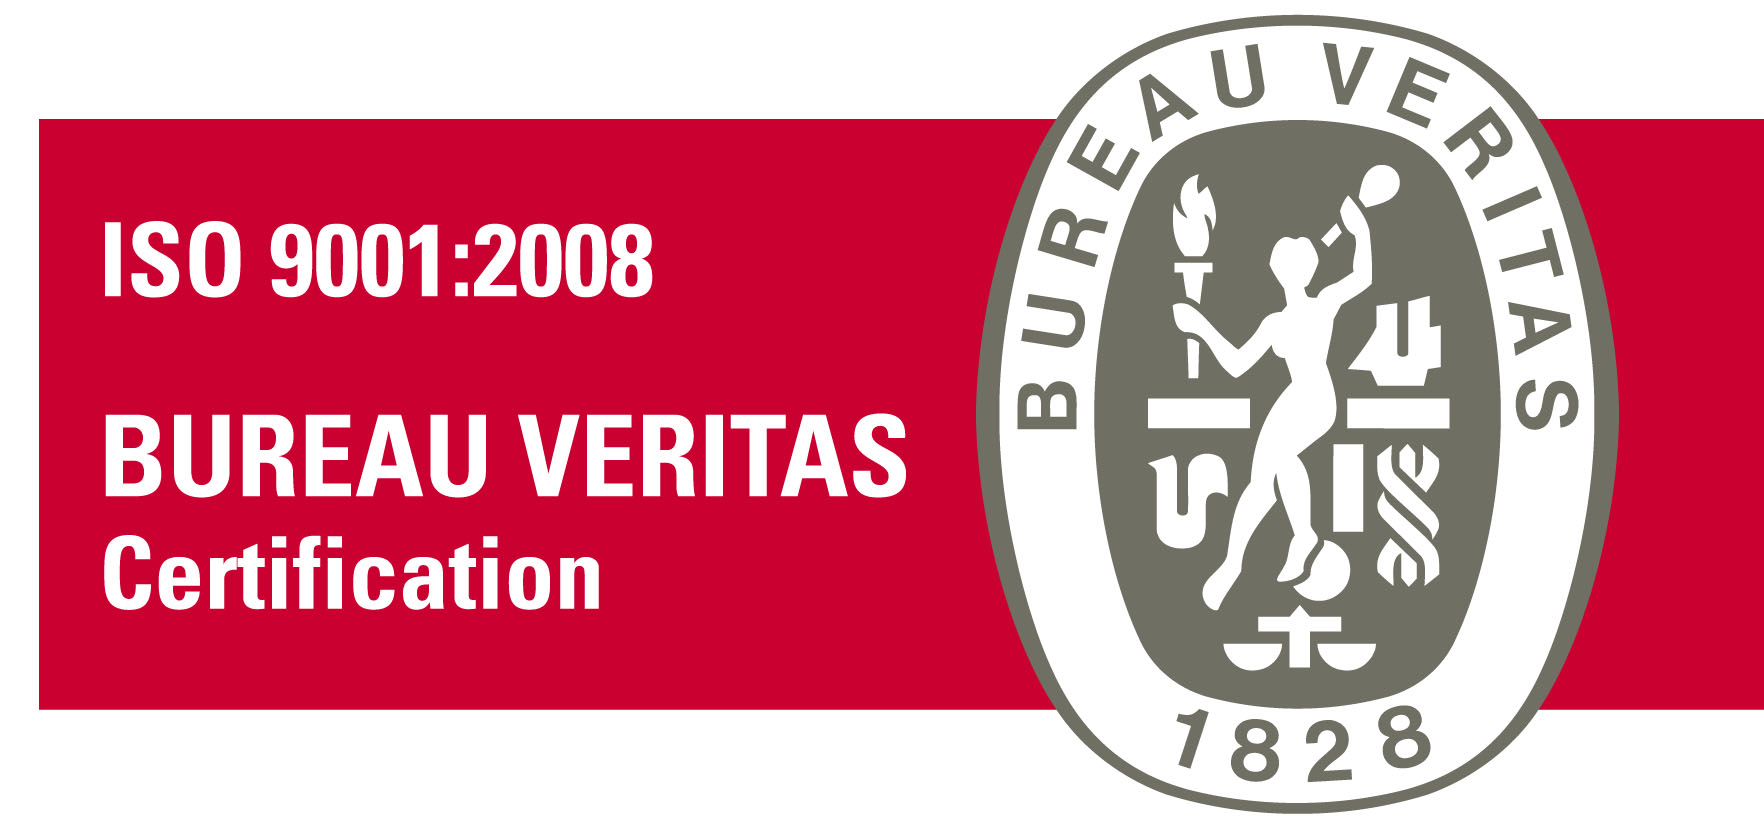 Vector image for Bureau Veritas